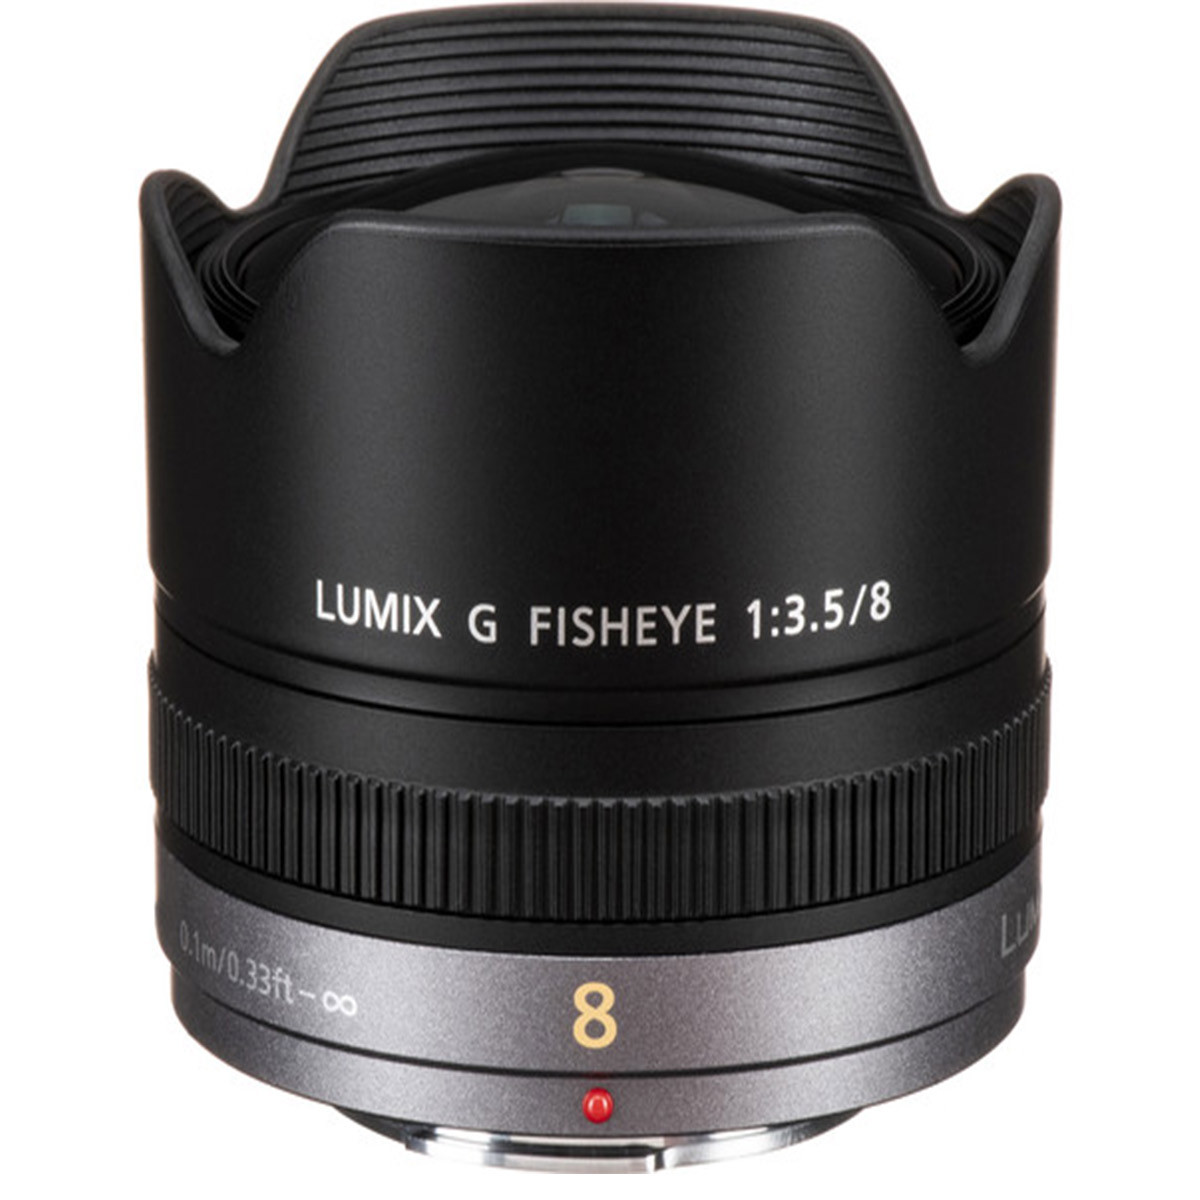 LUMIX G FISHEYE 8mm / F3.5